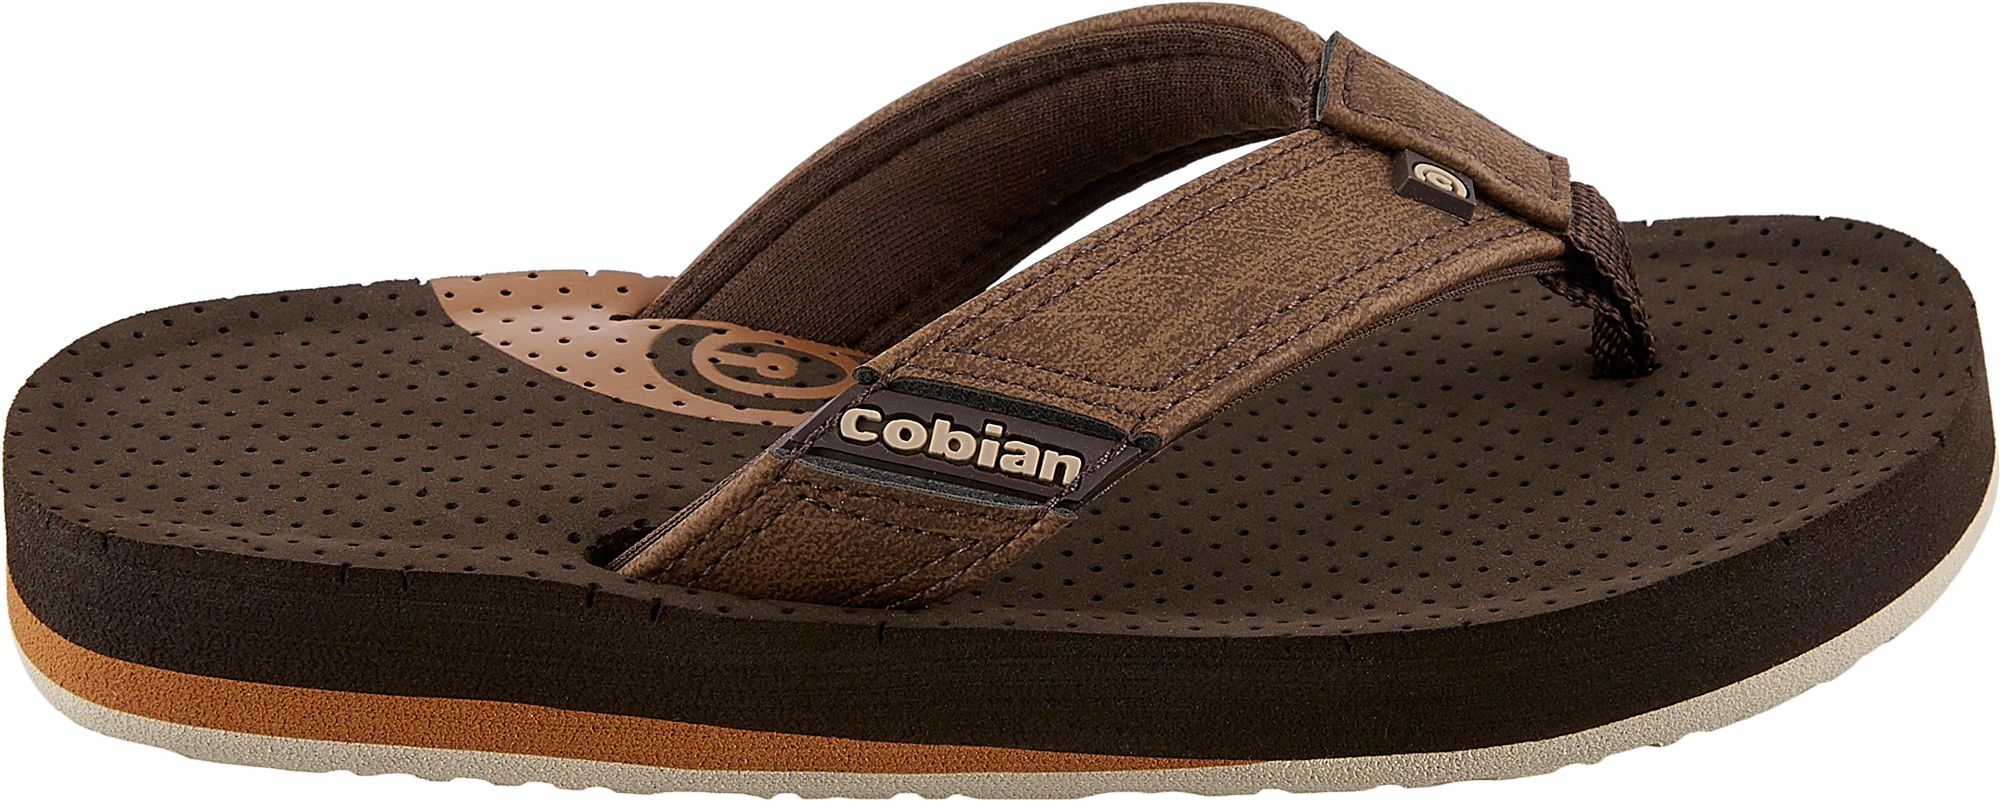 cobian corporation